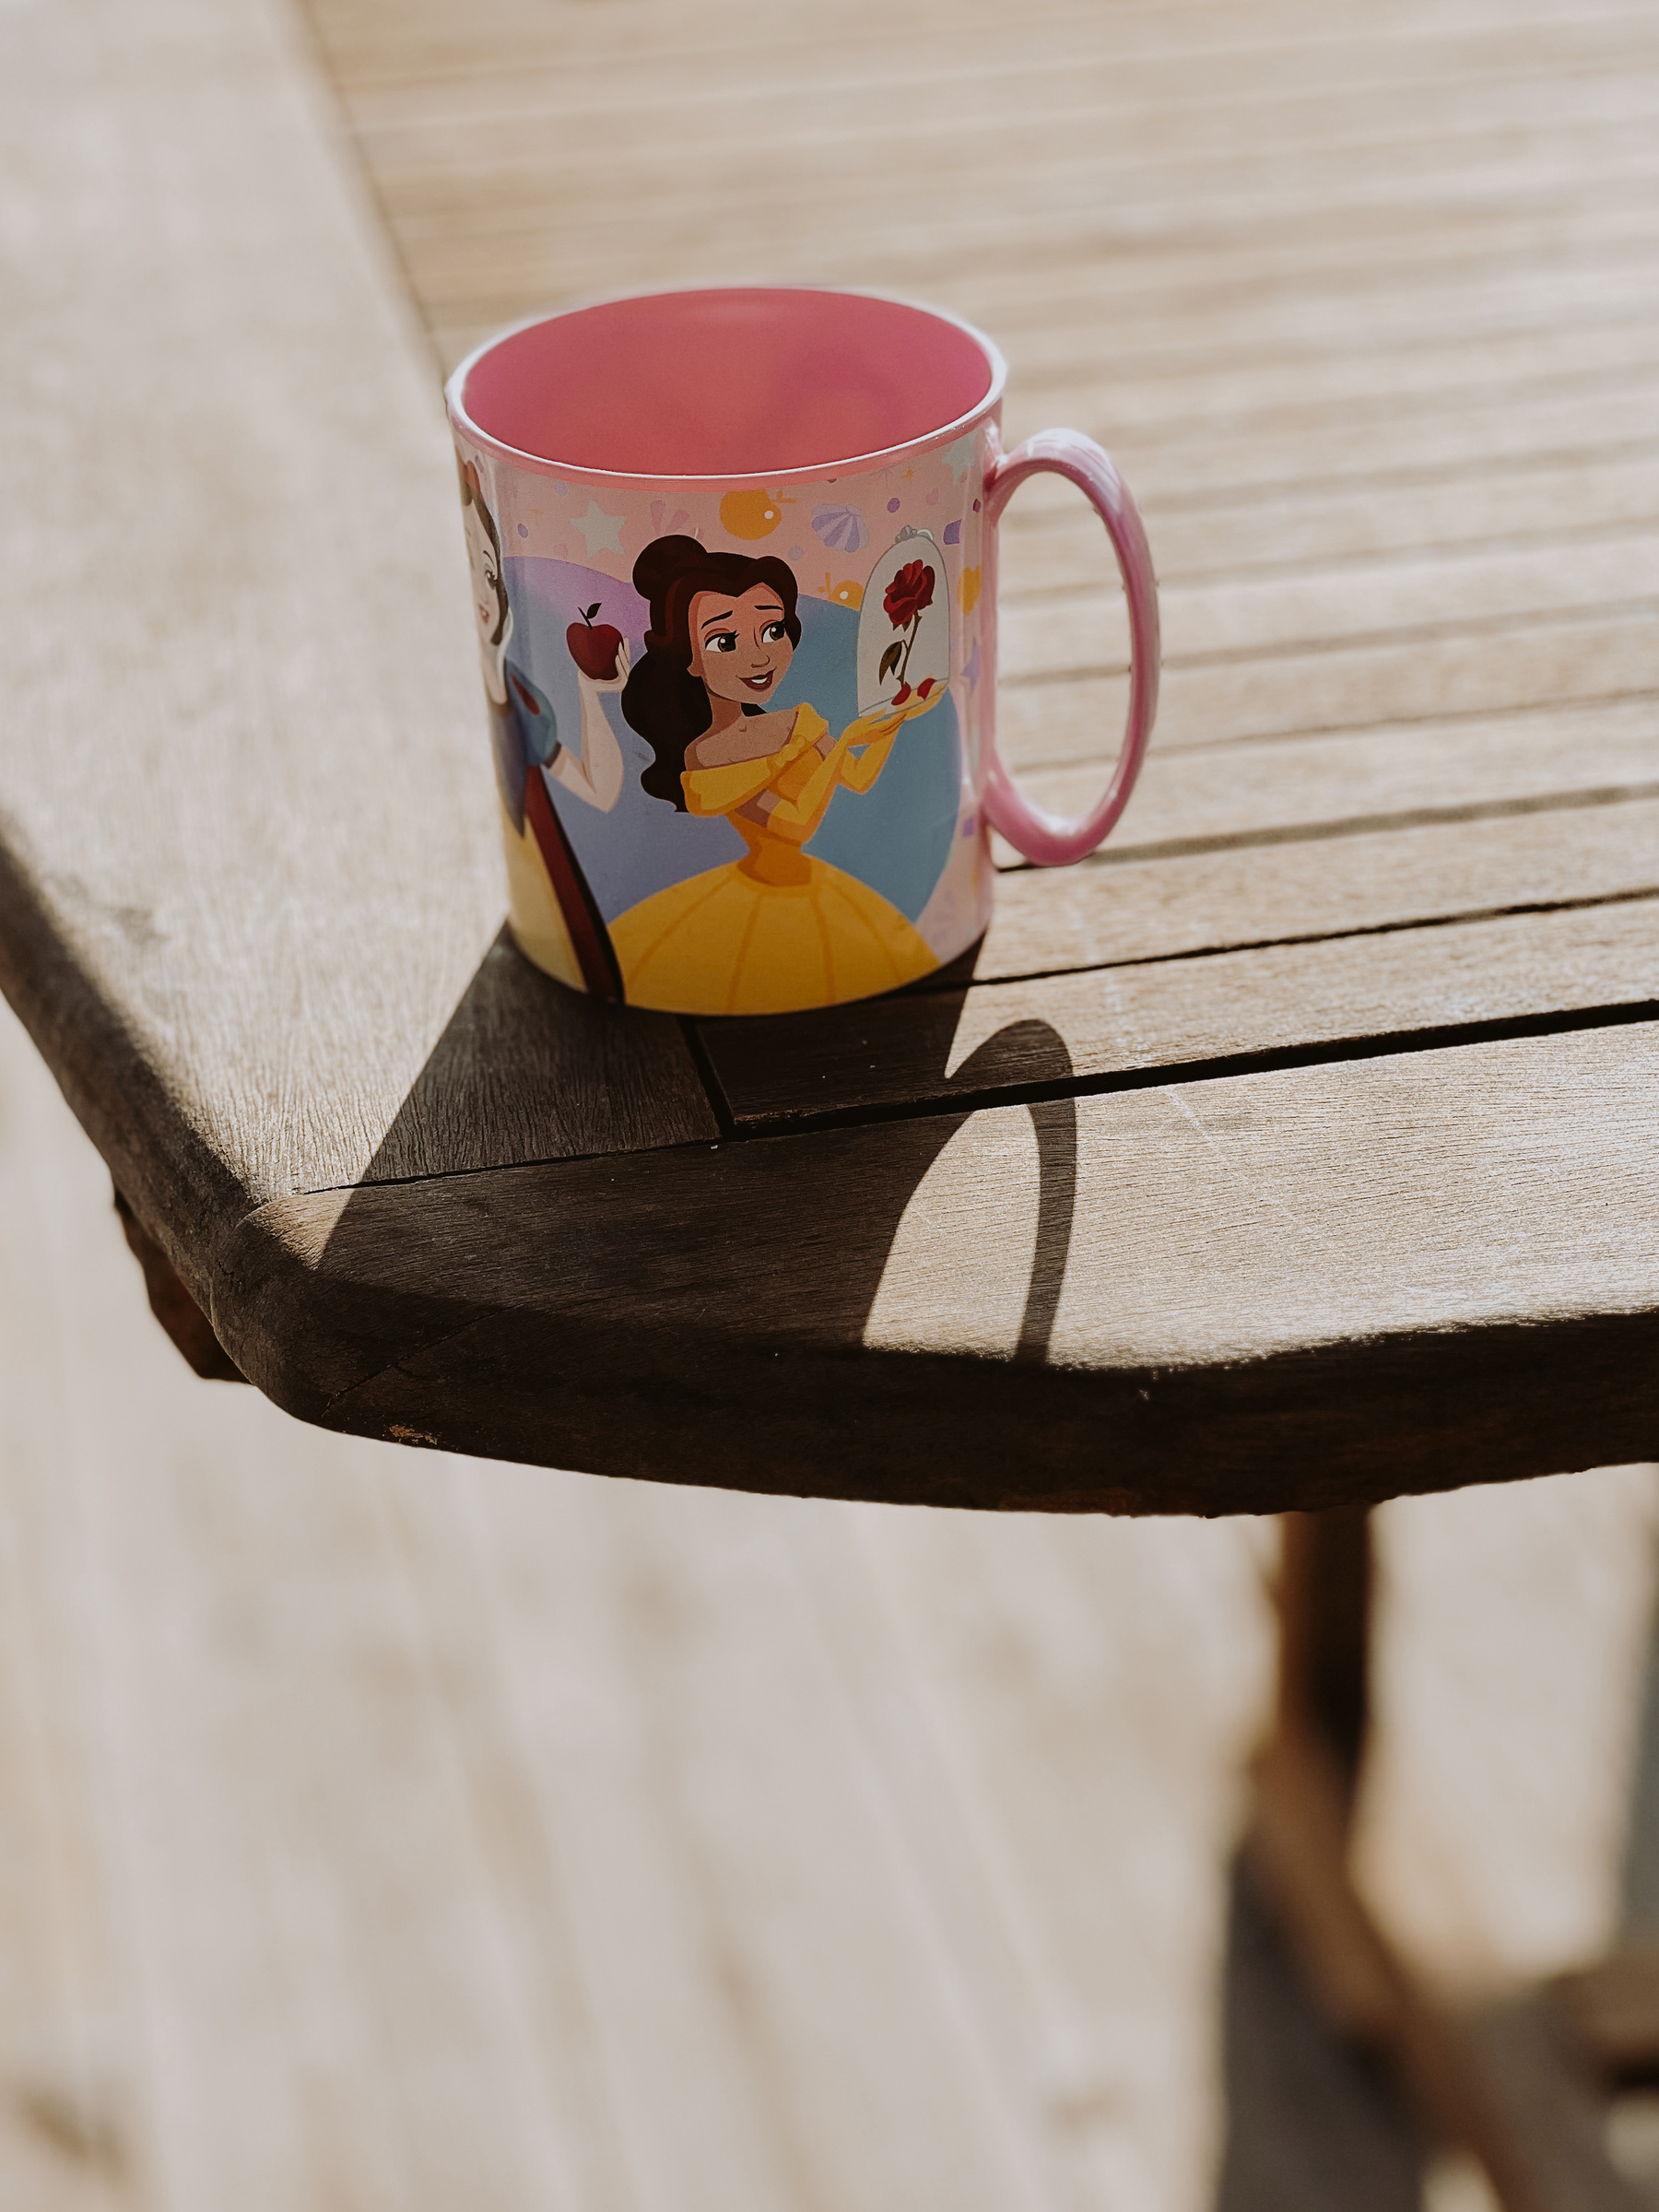 A coffee mug with Disney characters.